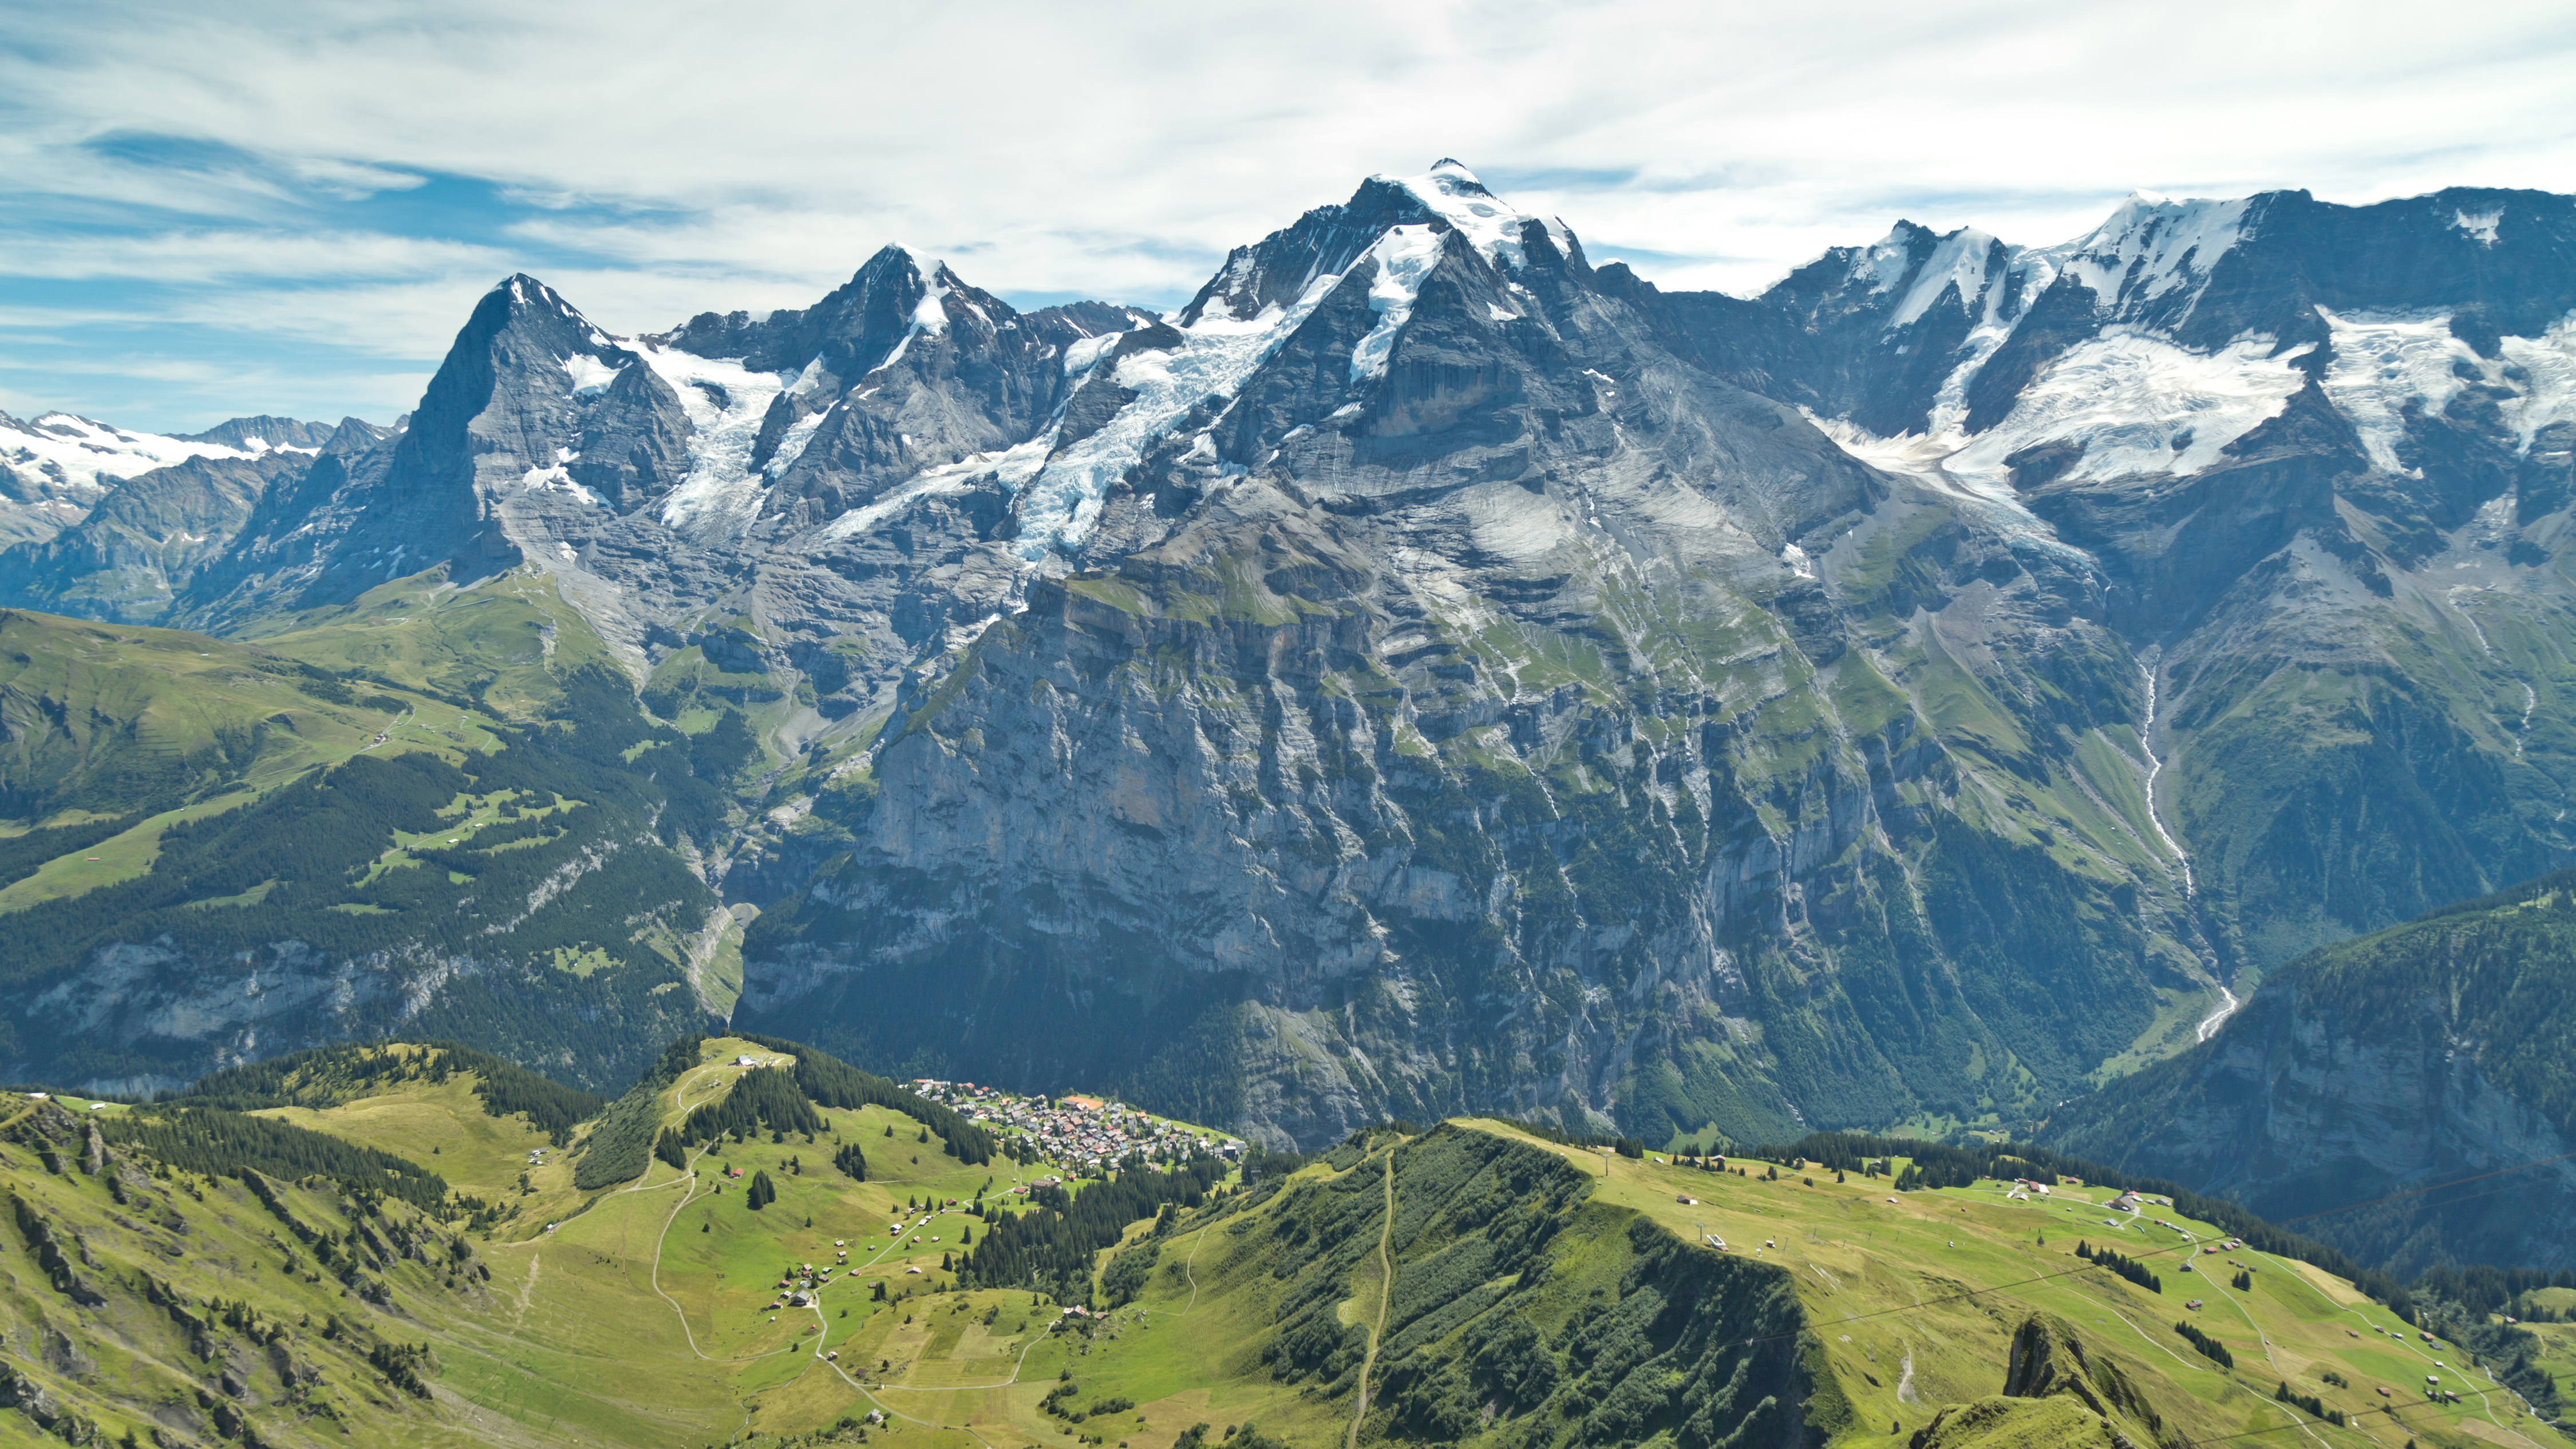 Near the Schilthorn summit overlooking the Eiger, Mönch, and Jungfrau peaks, Berner Oberland, Switzerland.